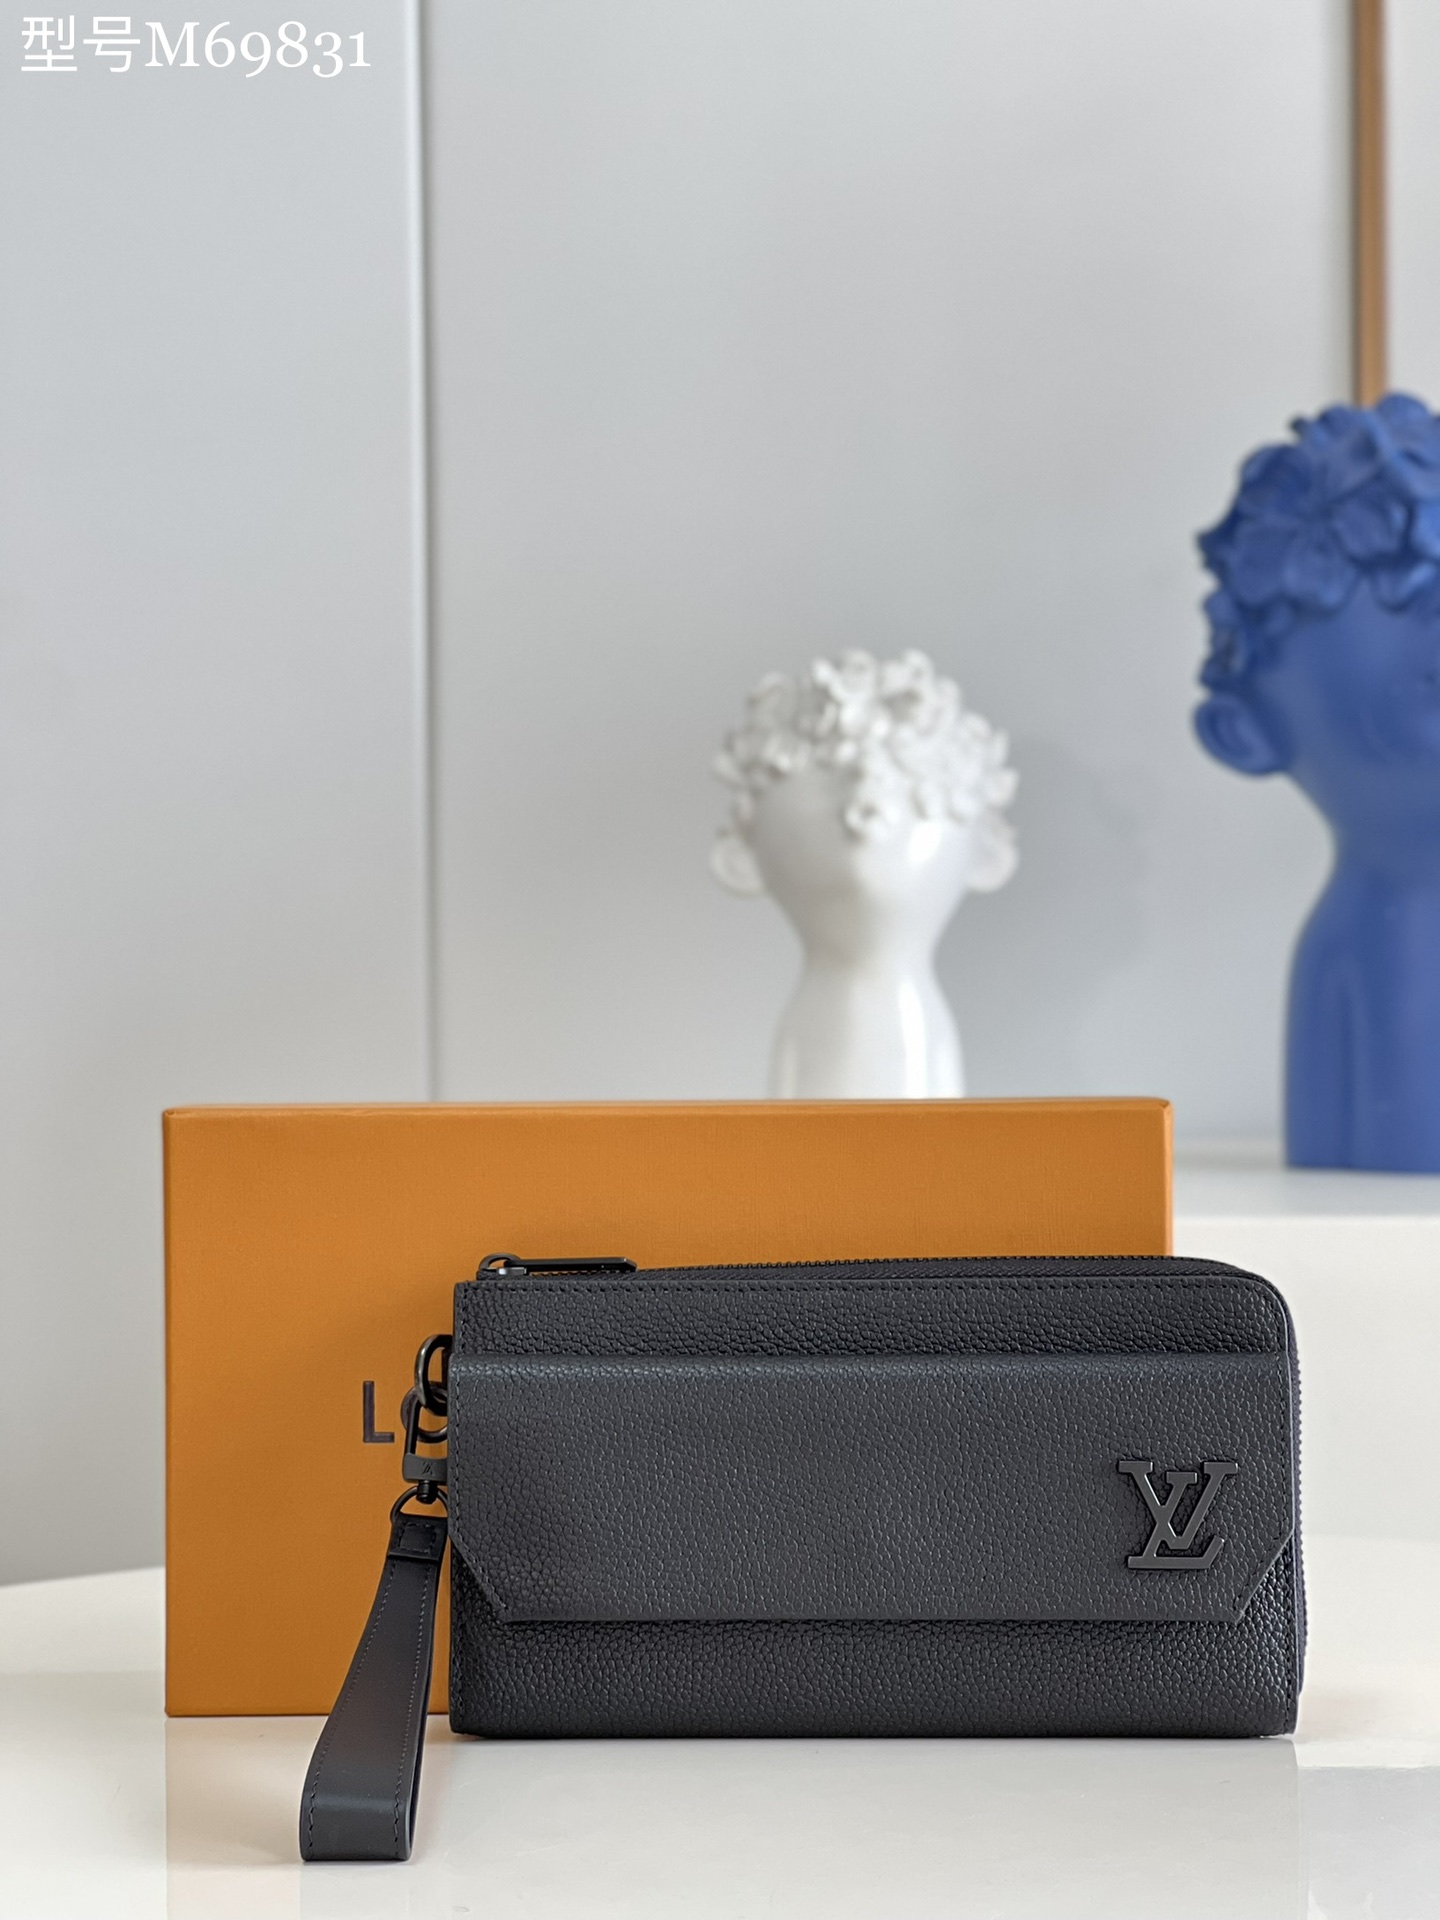 Louis Vuitton Wallet Black Men Calfskin Cowhide M69831